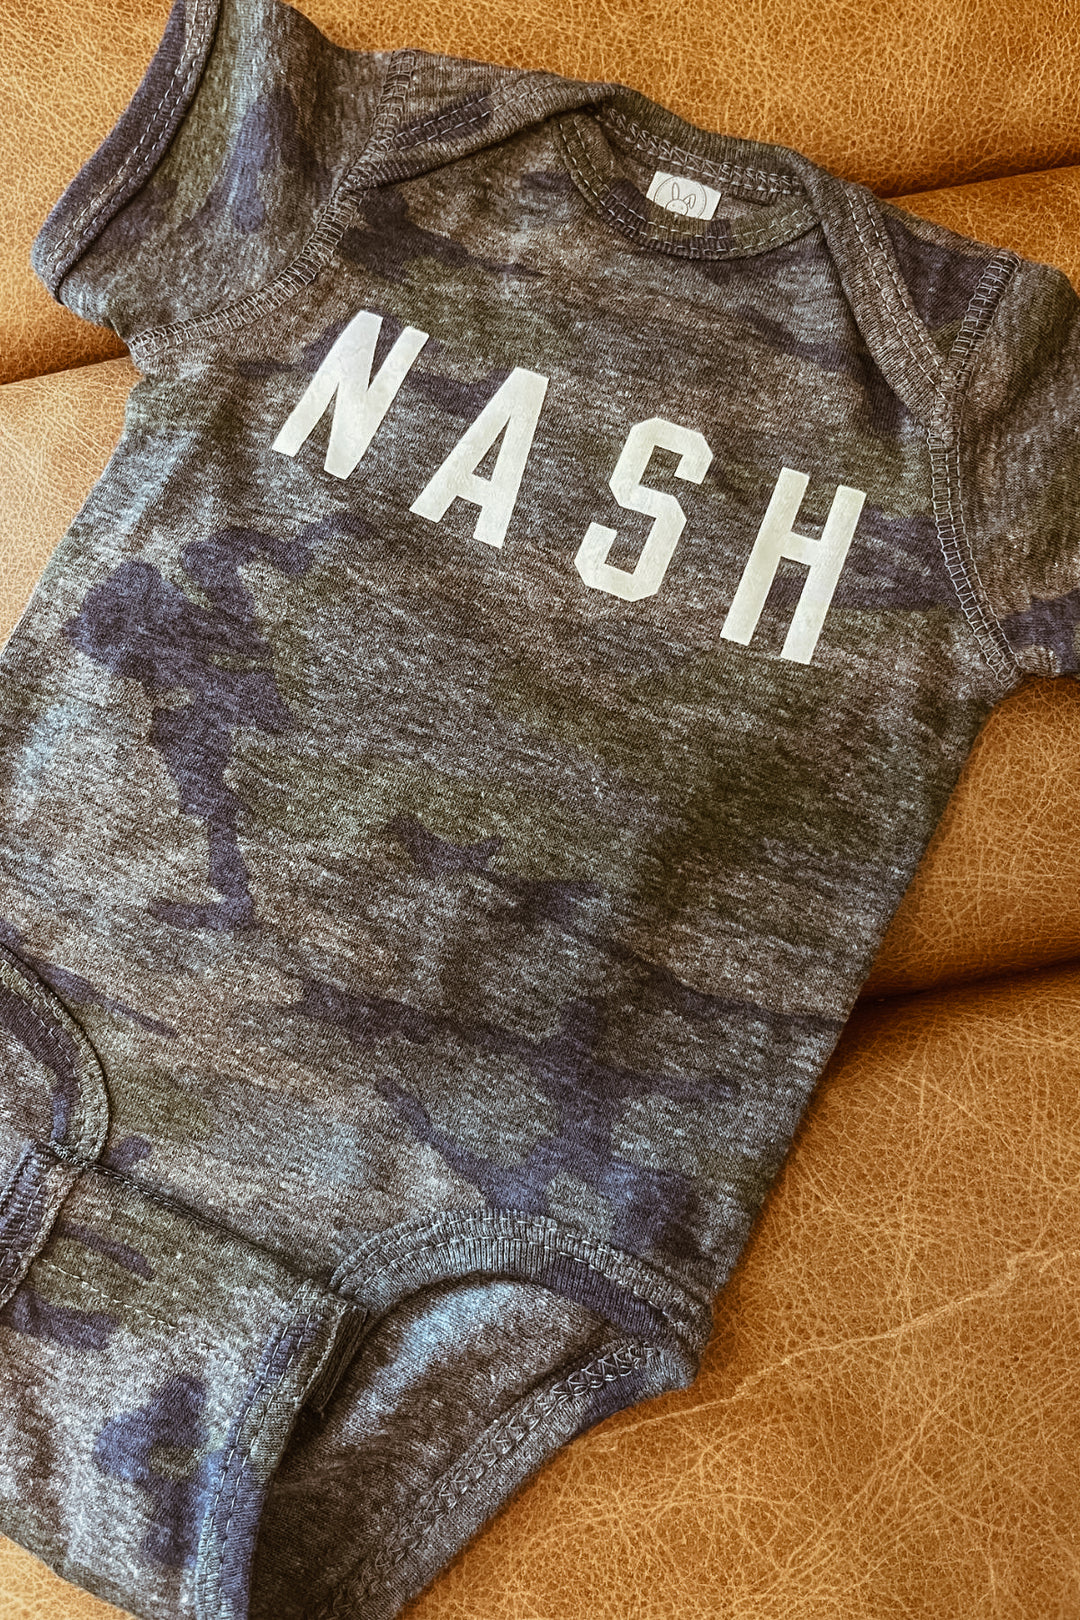 Baby NASH Onesie [Camo]